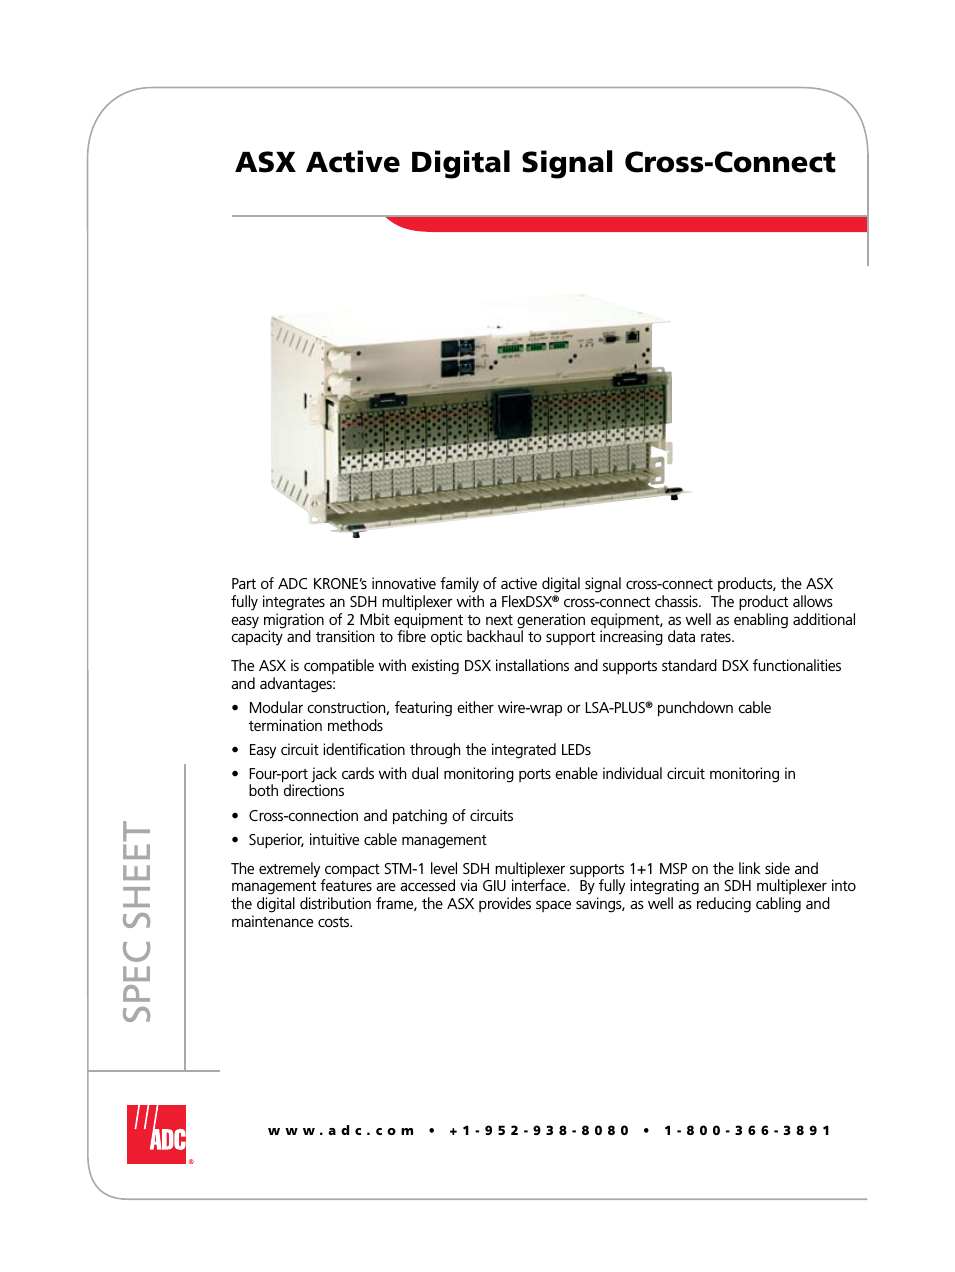 Active Digital Signal Cross-Connect ASX